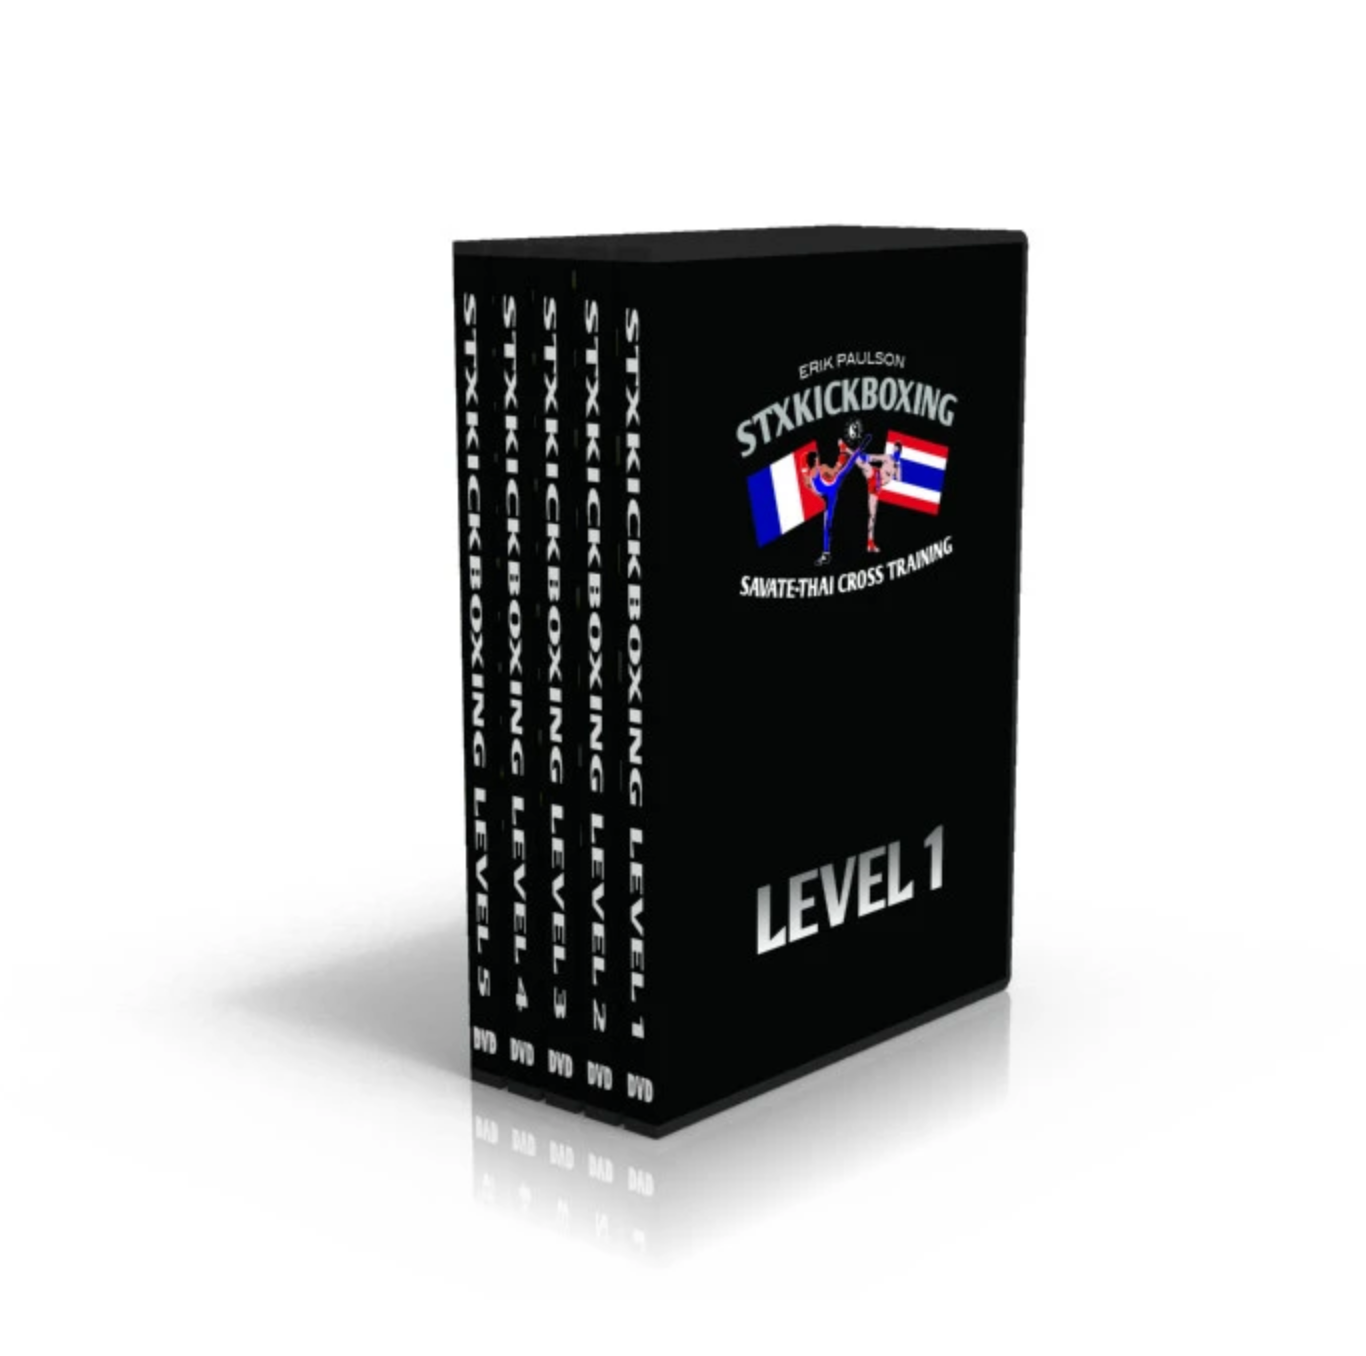 STXKICKBOXING Levels 1 - 5 (5 DVD Set) by Erik Paulson - Budovideos